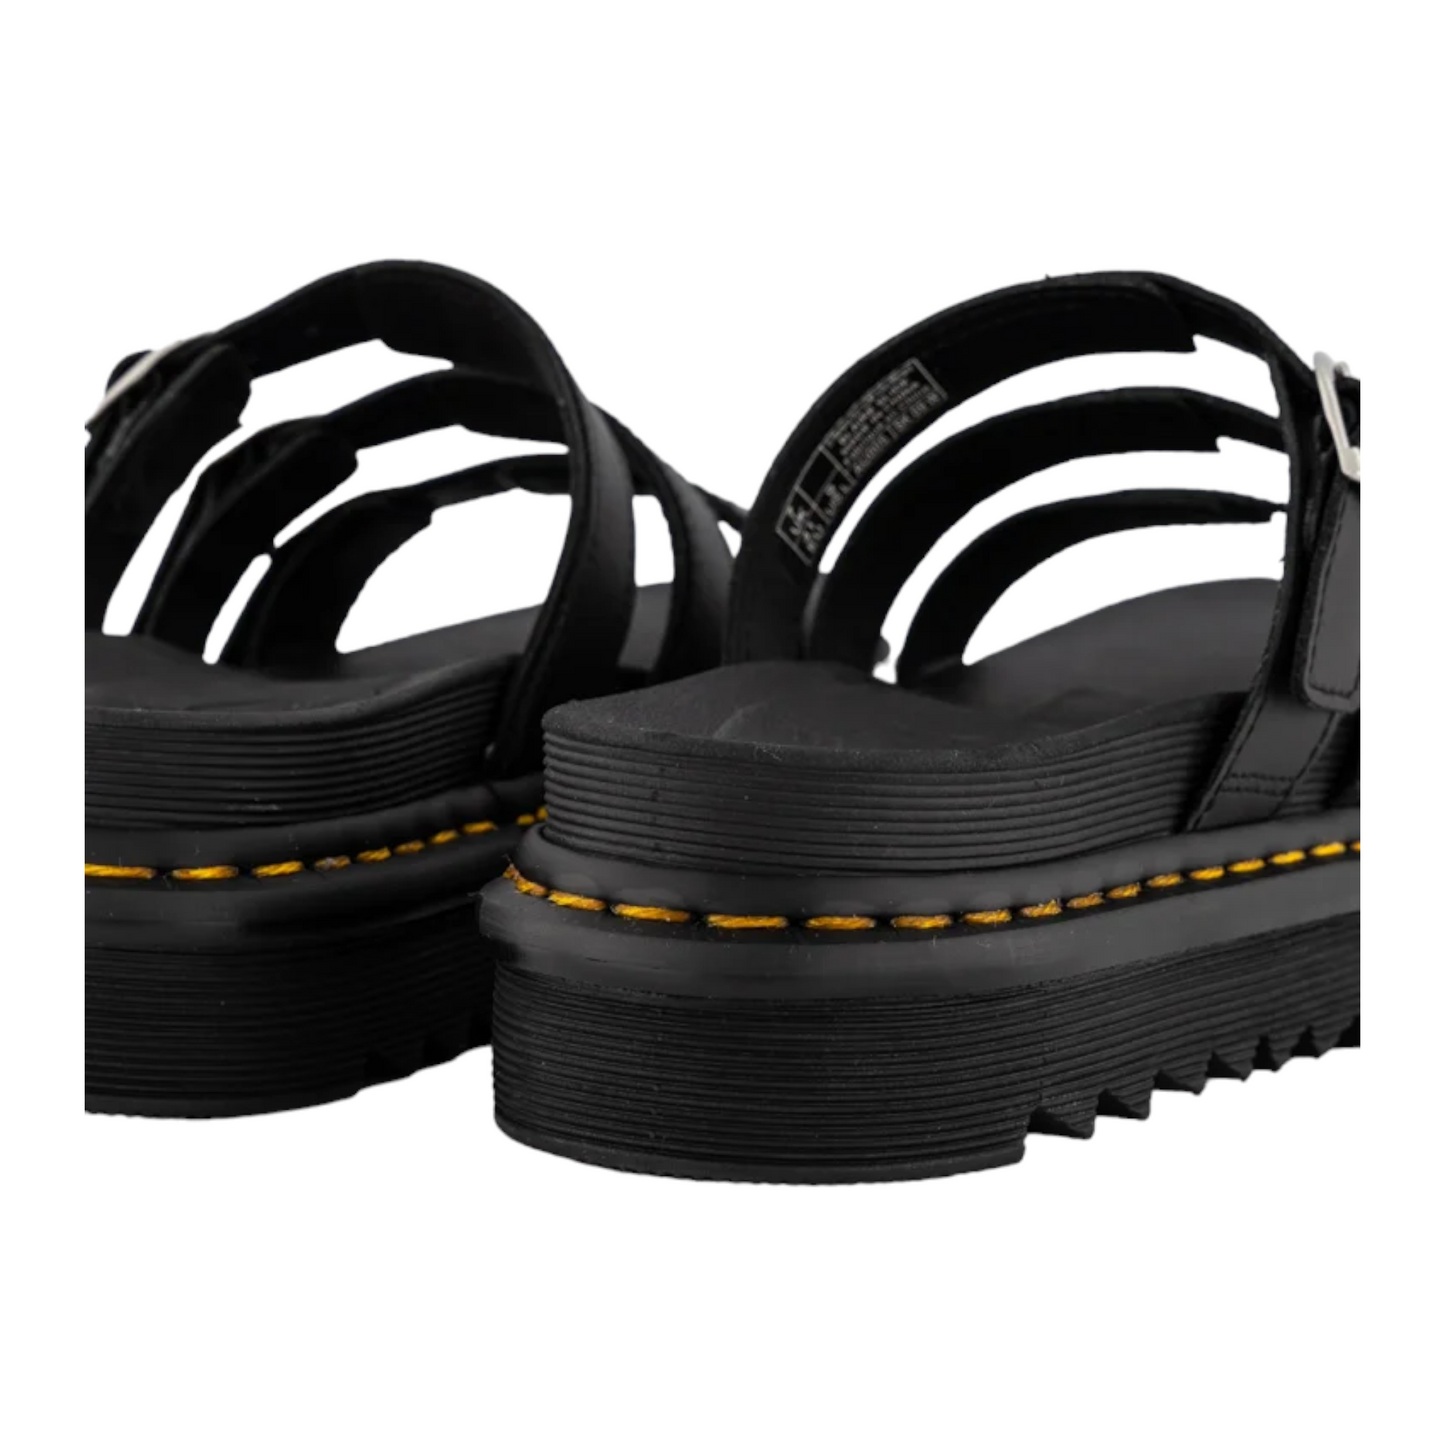 .Dr Martens Blaire Slide 3 Strap Buckle Sandal Black Leather (25456001.BLK) - RO - R2L15